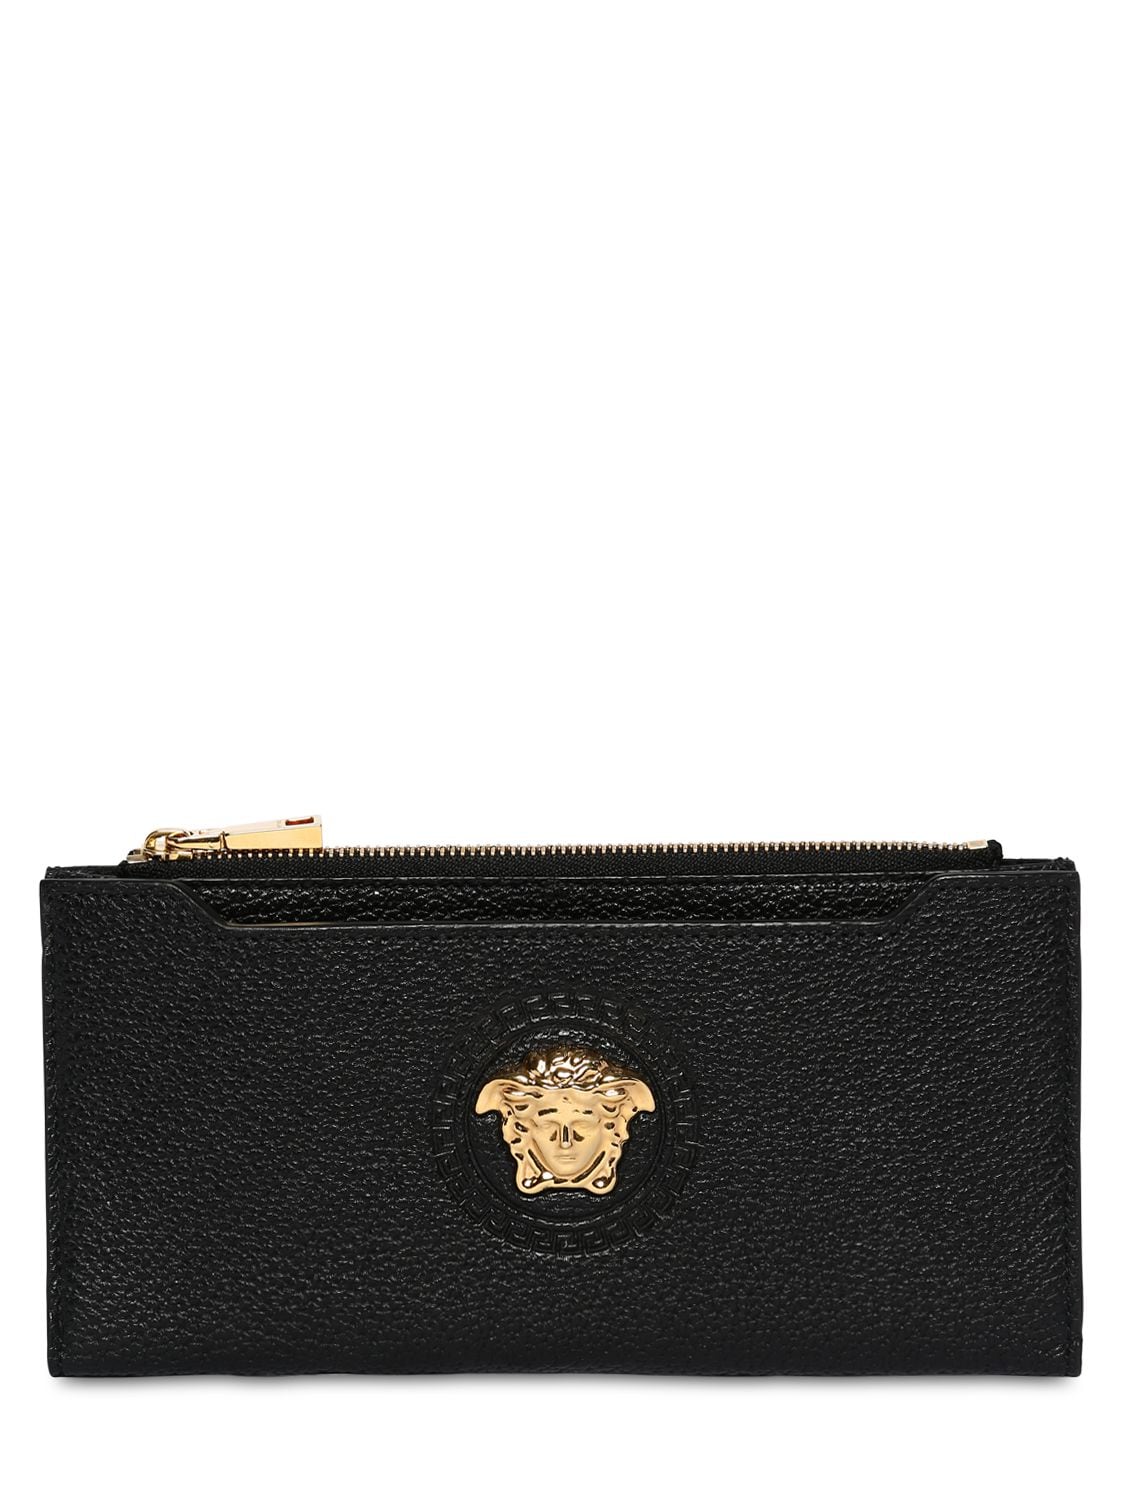 Versace Leather Wallet In Black